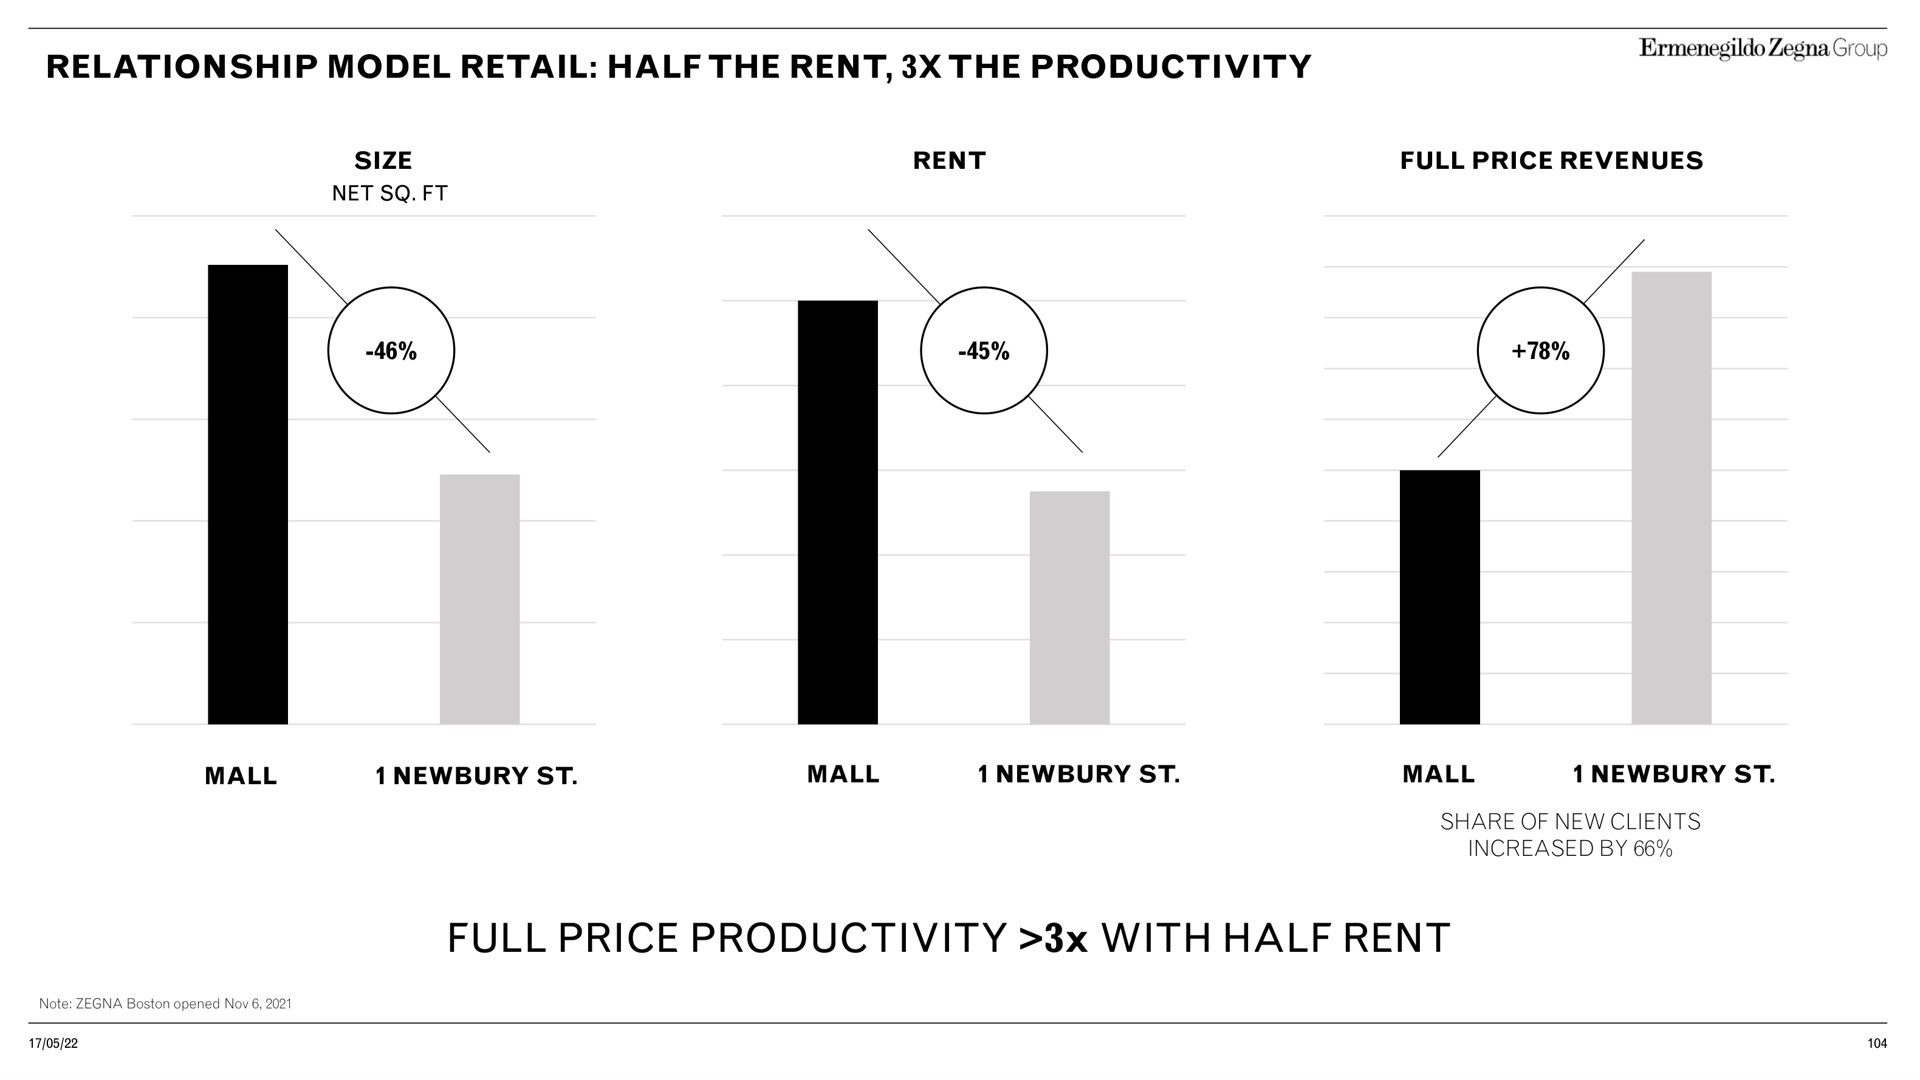 full price productivity with half rent | Zegna